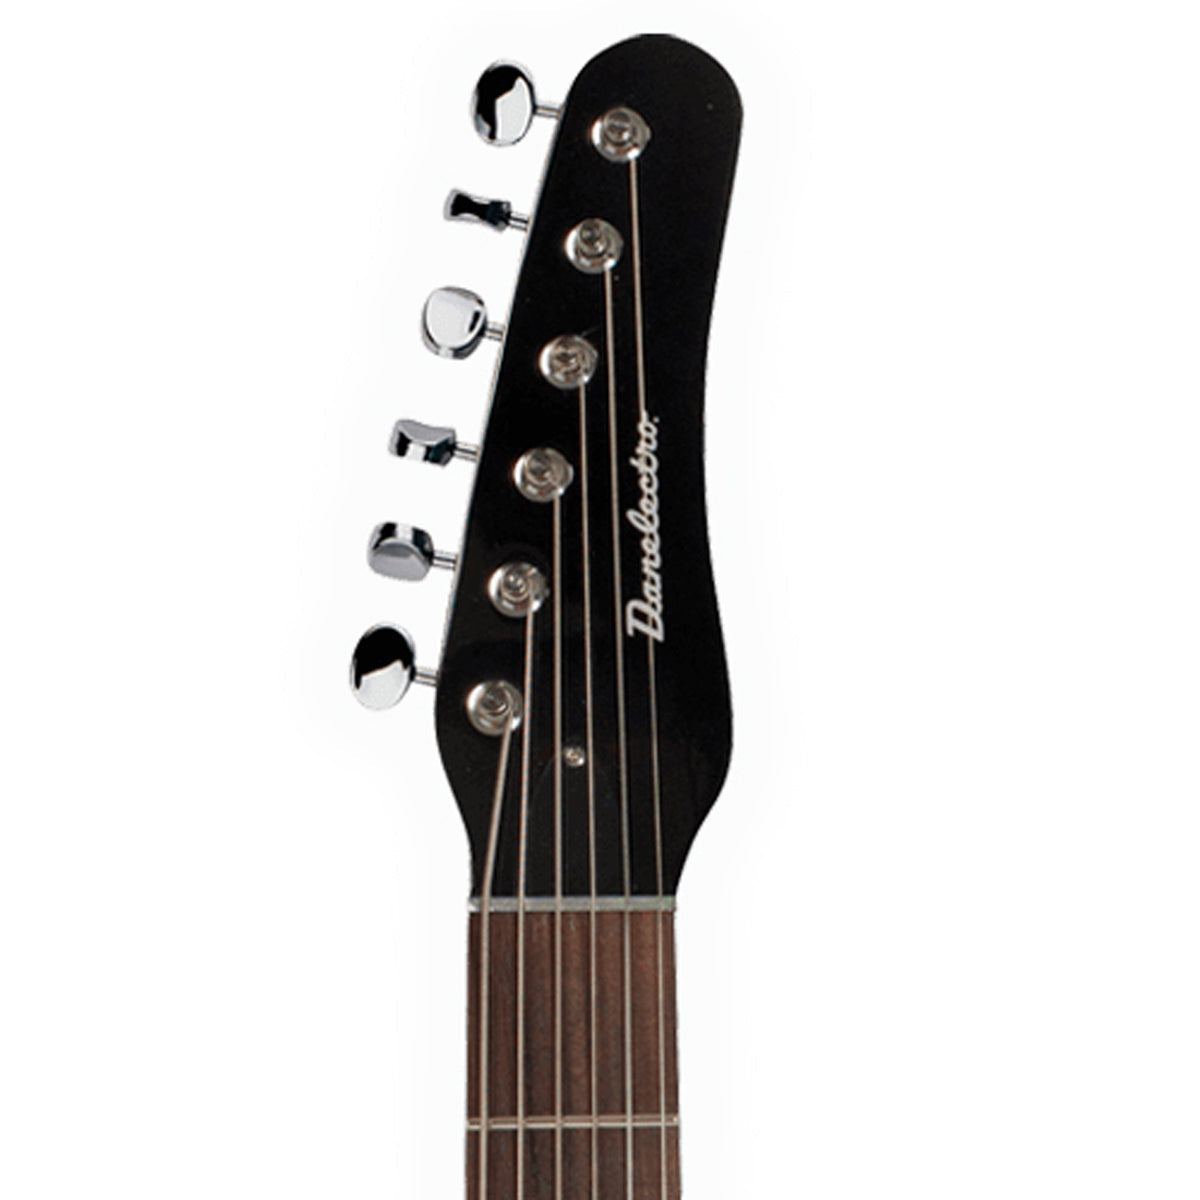 Danelectro '56 Baritone Electric Guitar ~ Black, Electric Guitar for sale at Richards Guitars.